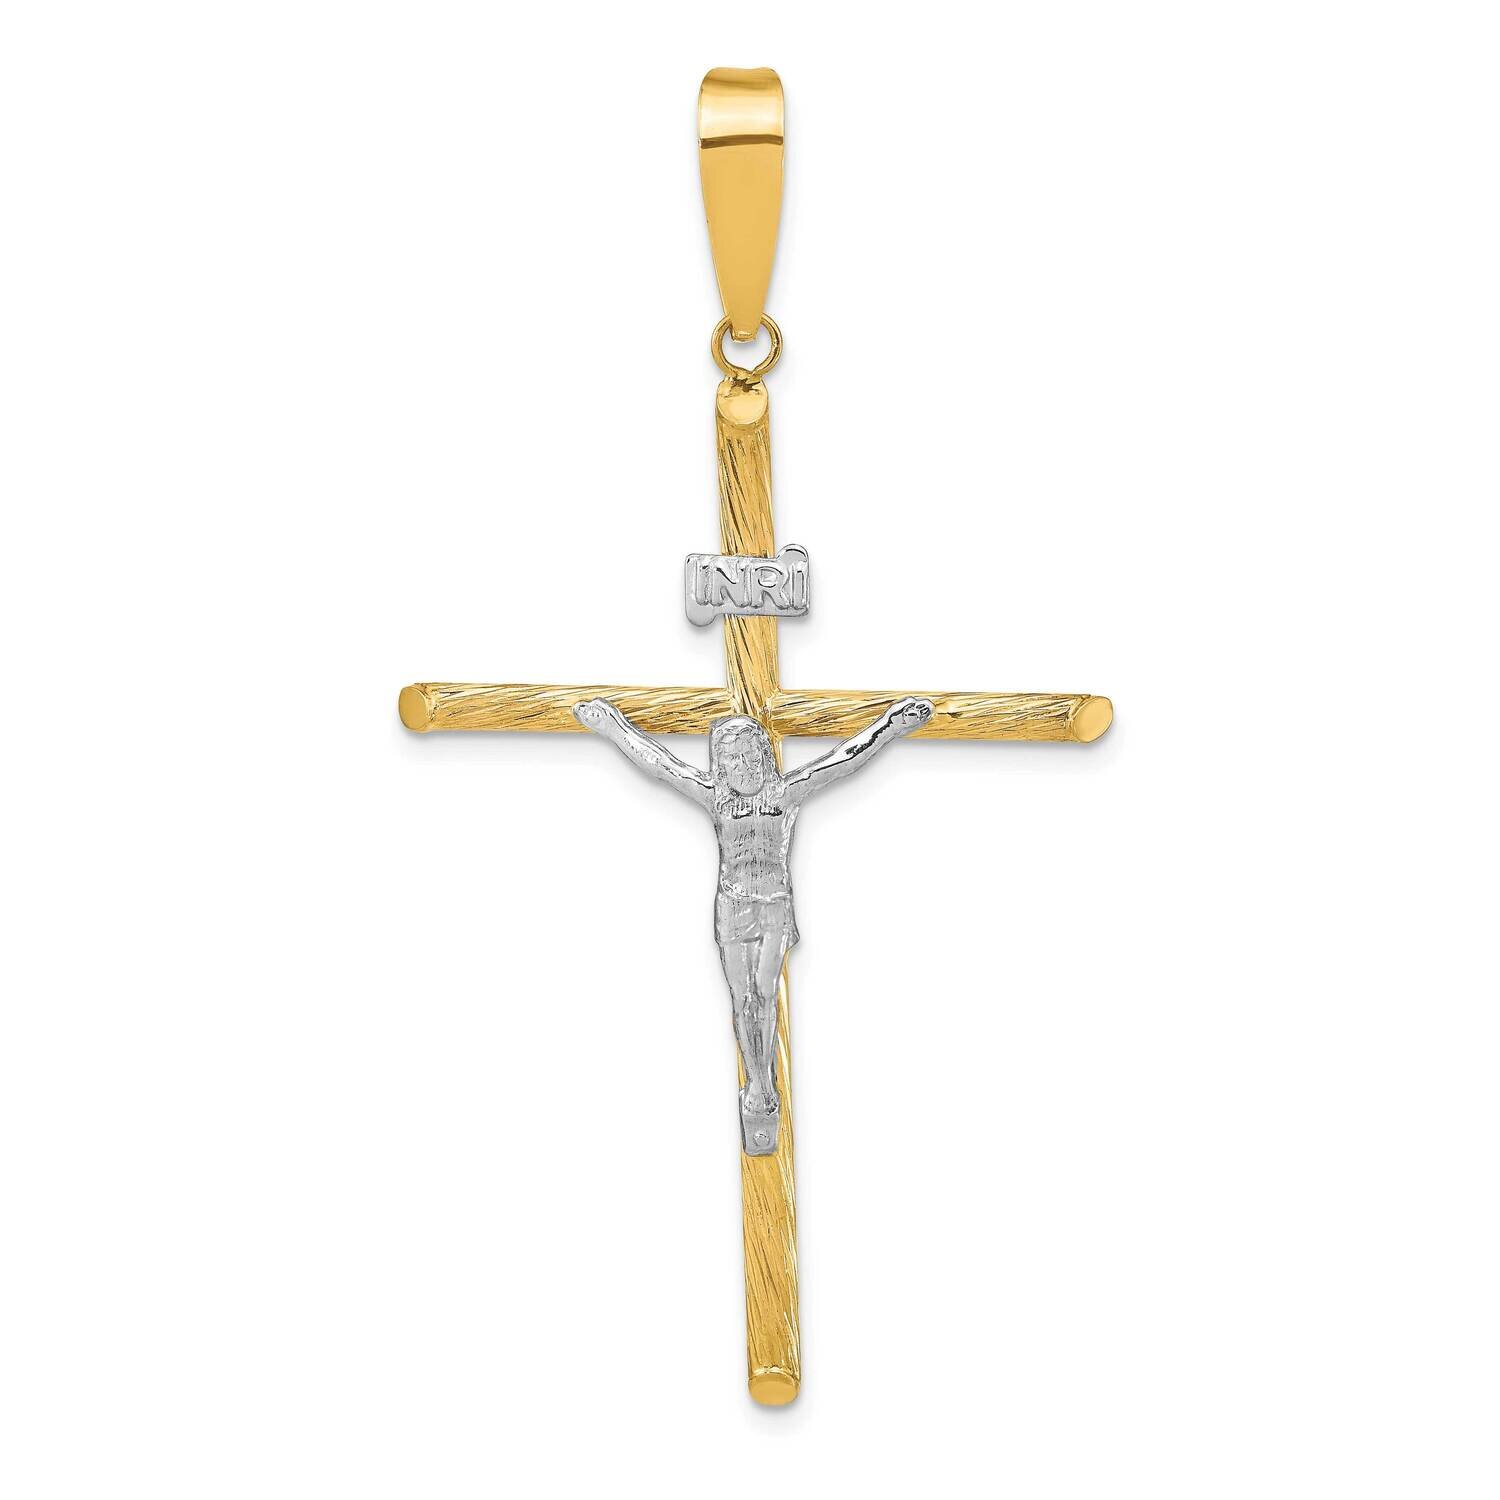 Polished &amp; Textured Inri Crucifix Cross Pendant 14k Gold with White Rhodium K9966